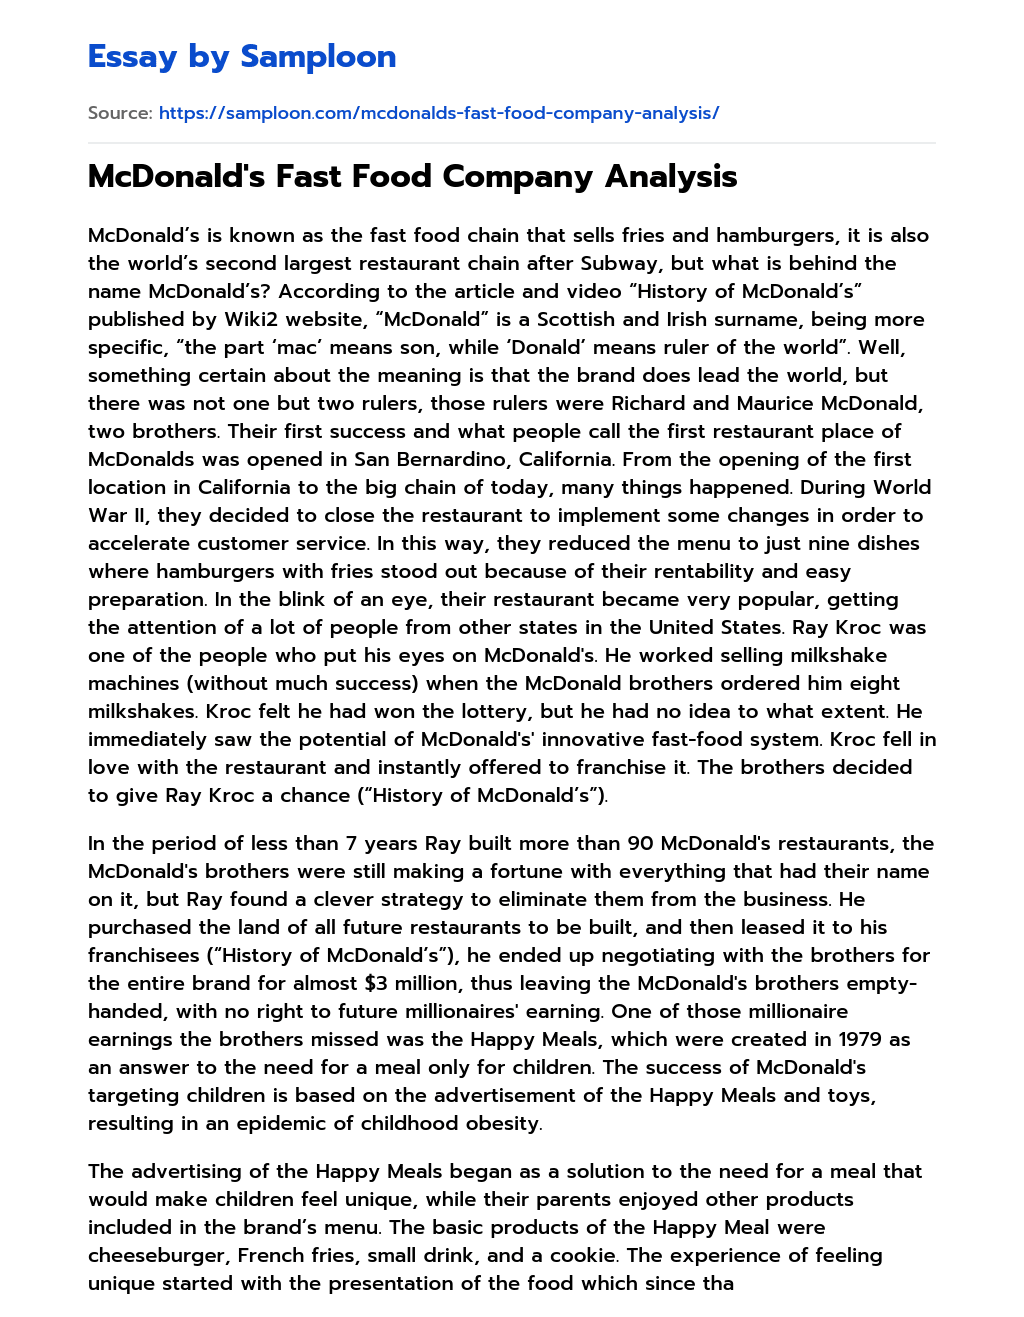 McDonald’s Fast Food Company Analysis essay